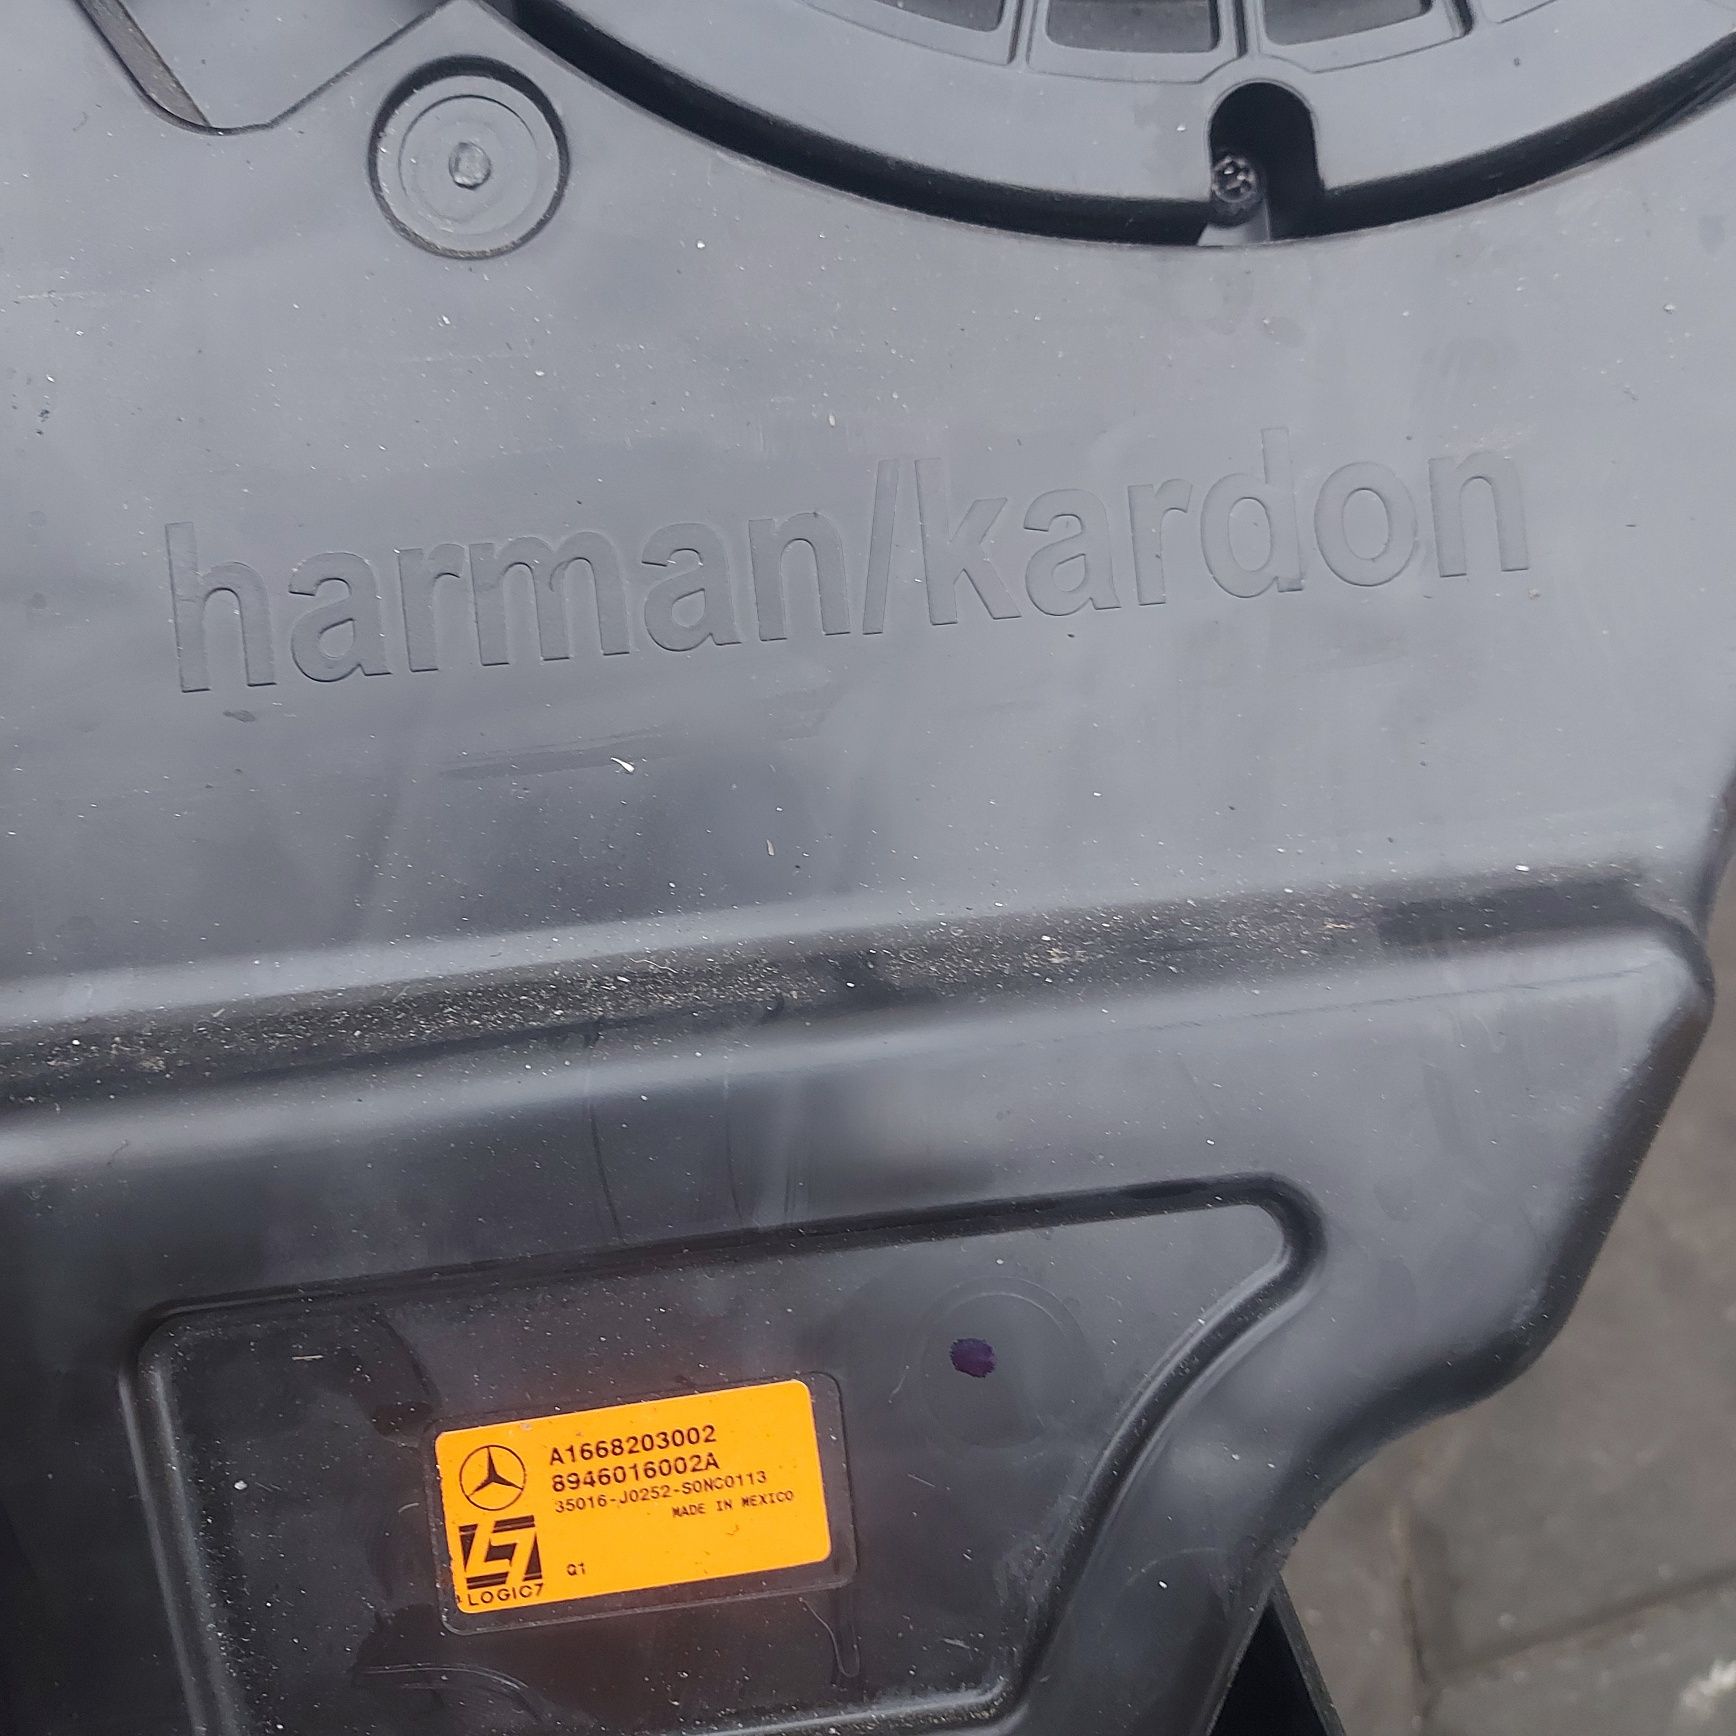 Subwoofer Harman kardon cod A1668203002 Mercedes GLE Coupe